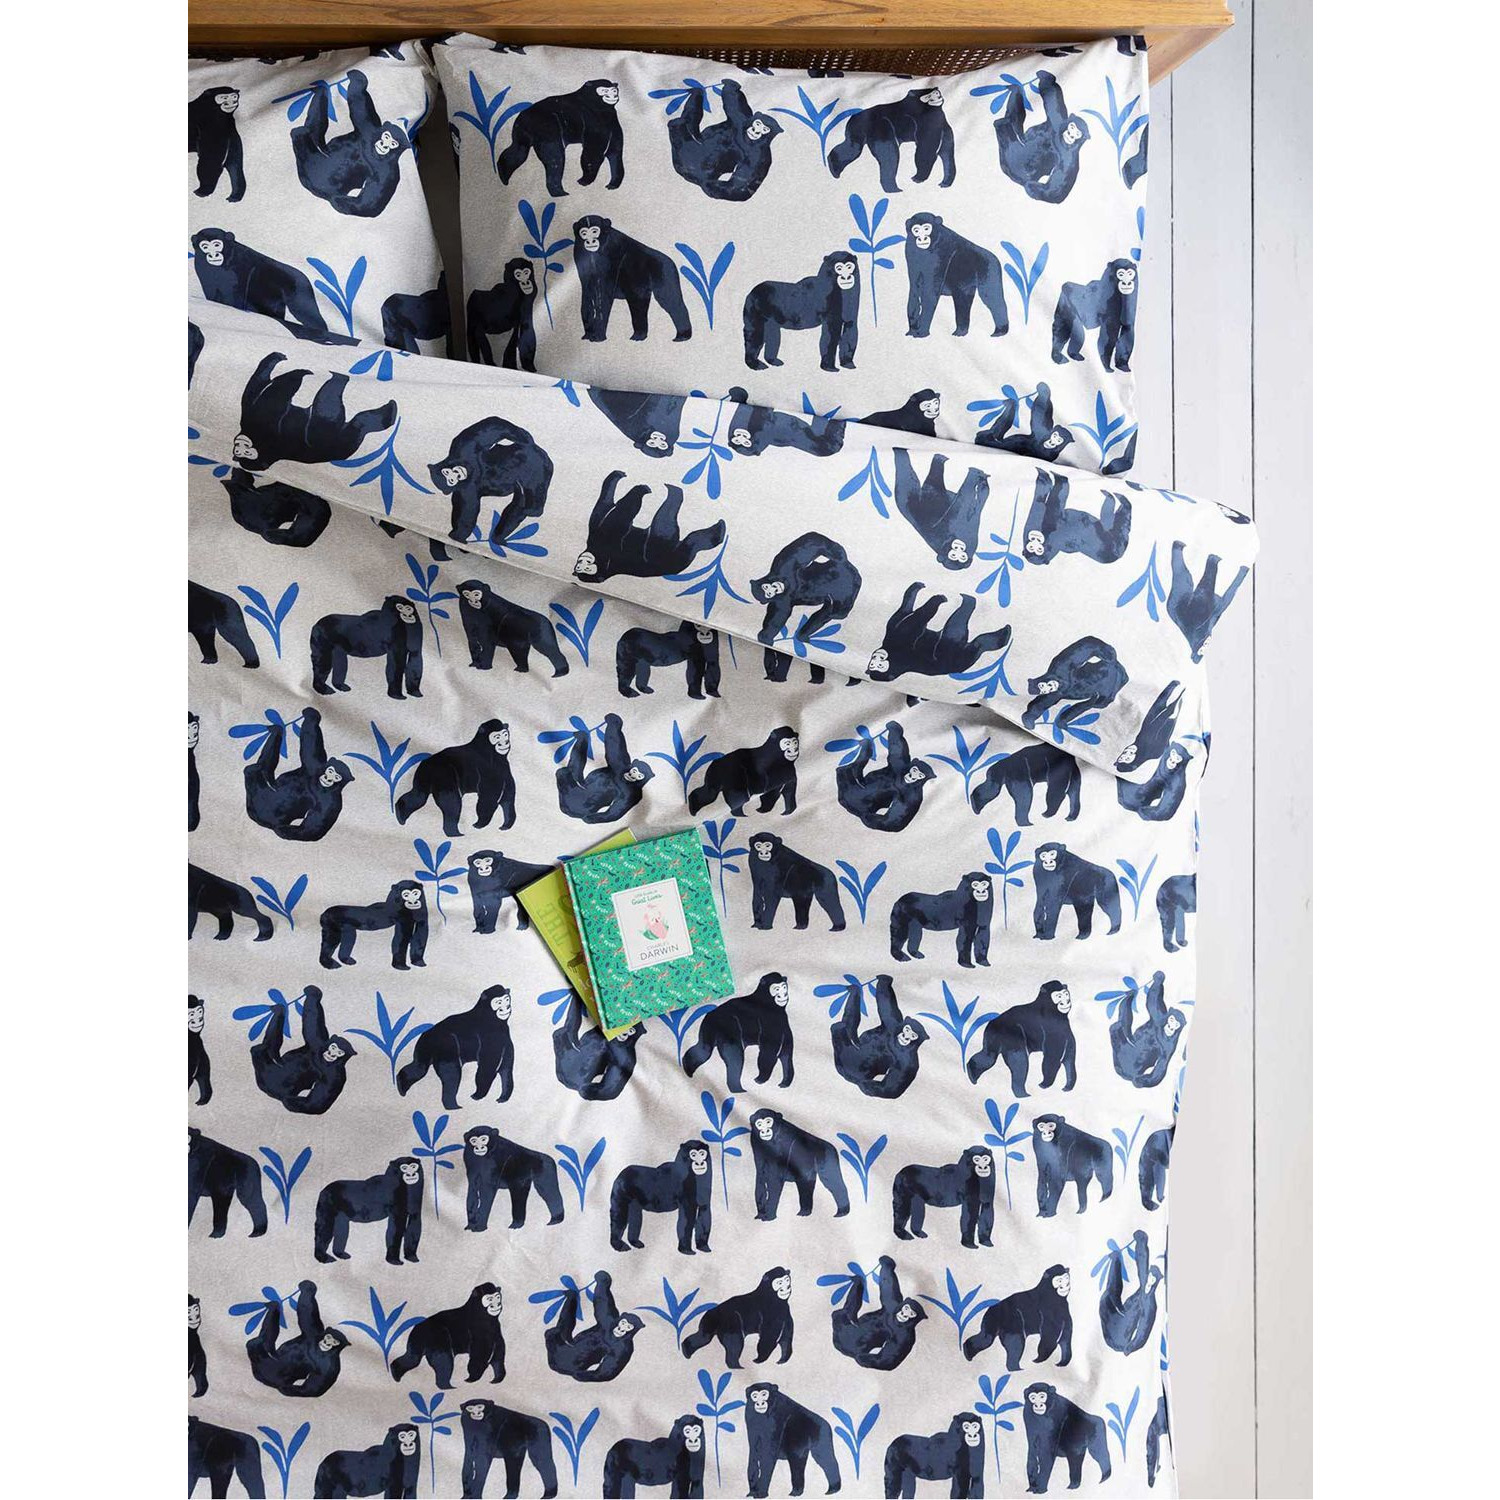 Anorak Organic Cotton Reversible Gorilla Duvet Cover and Pillowcase Set, Multi